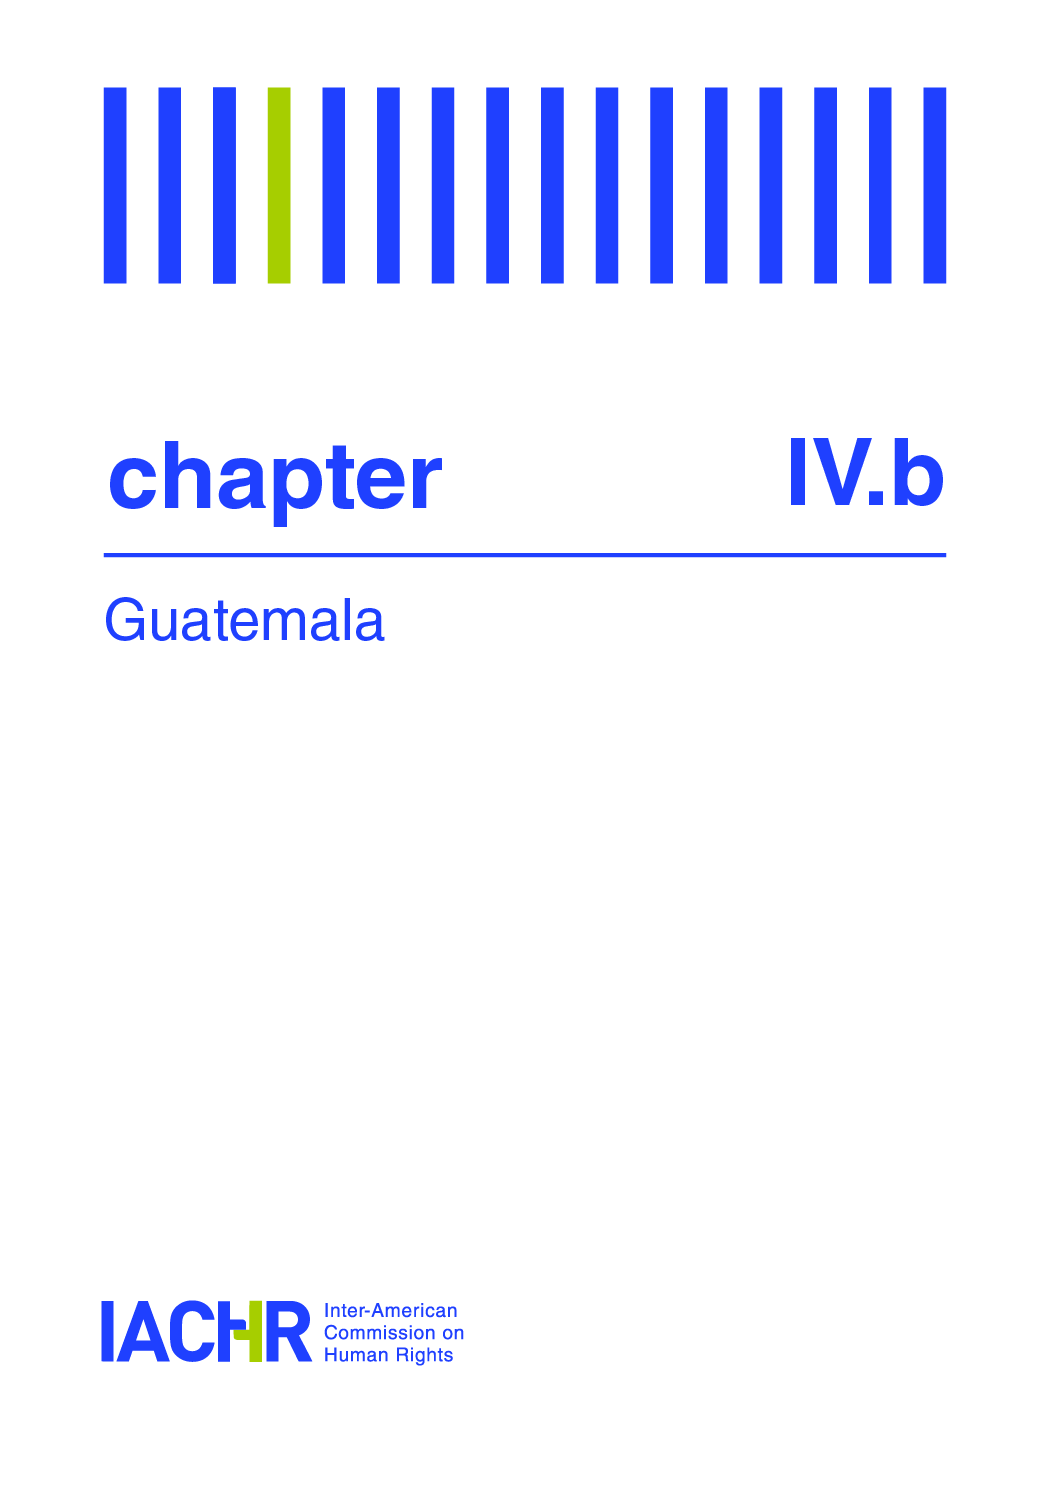 B - Special report: Guatemala